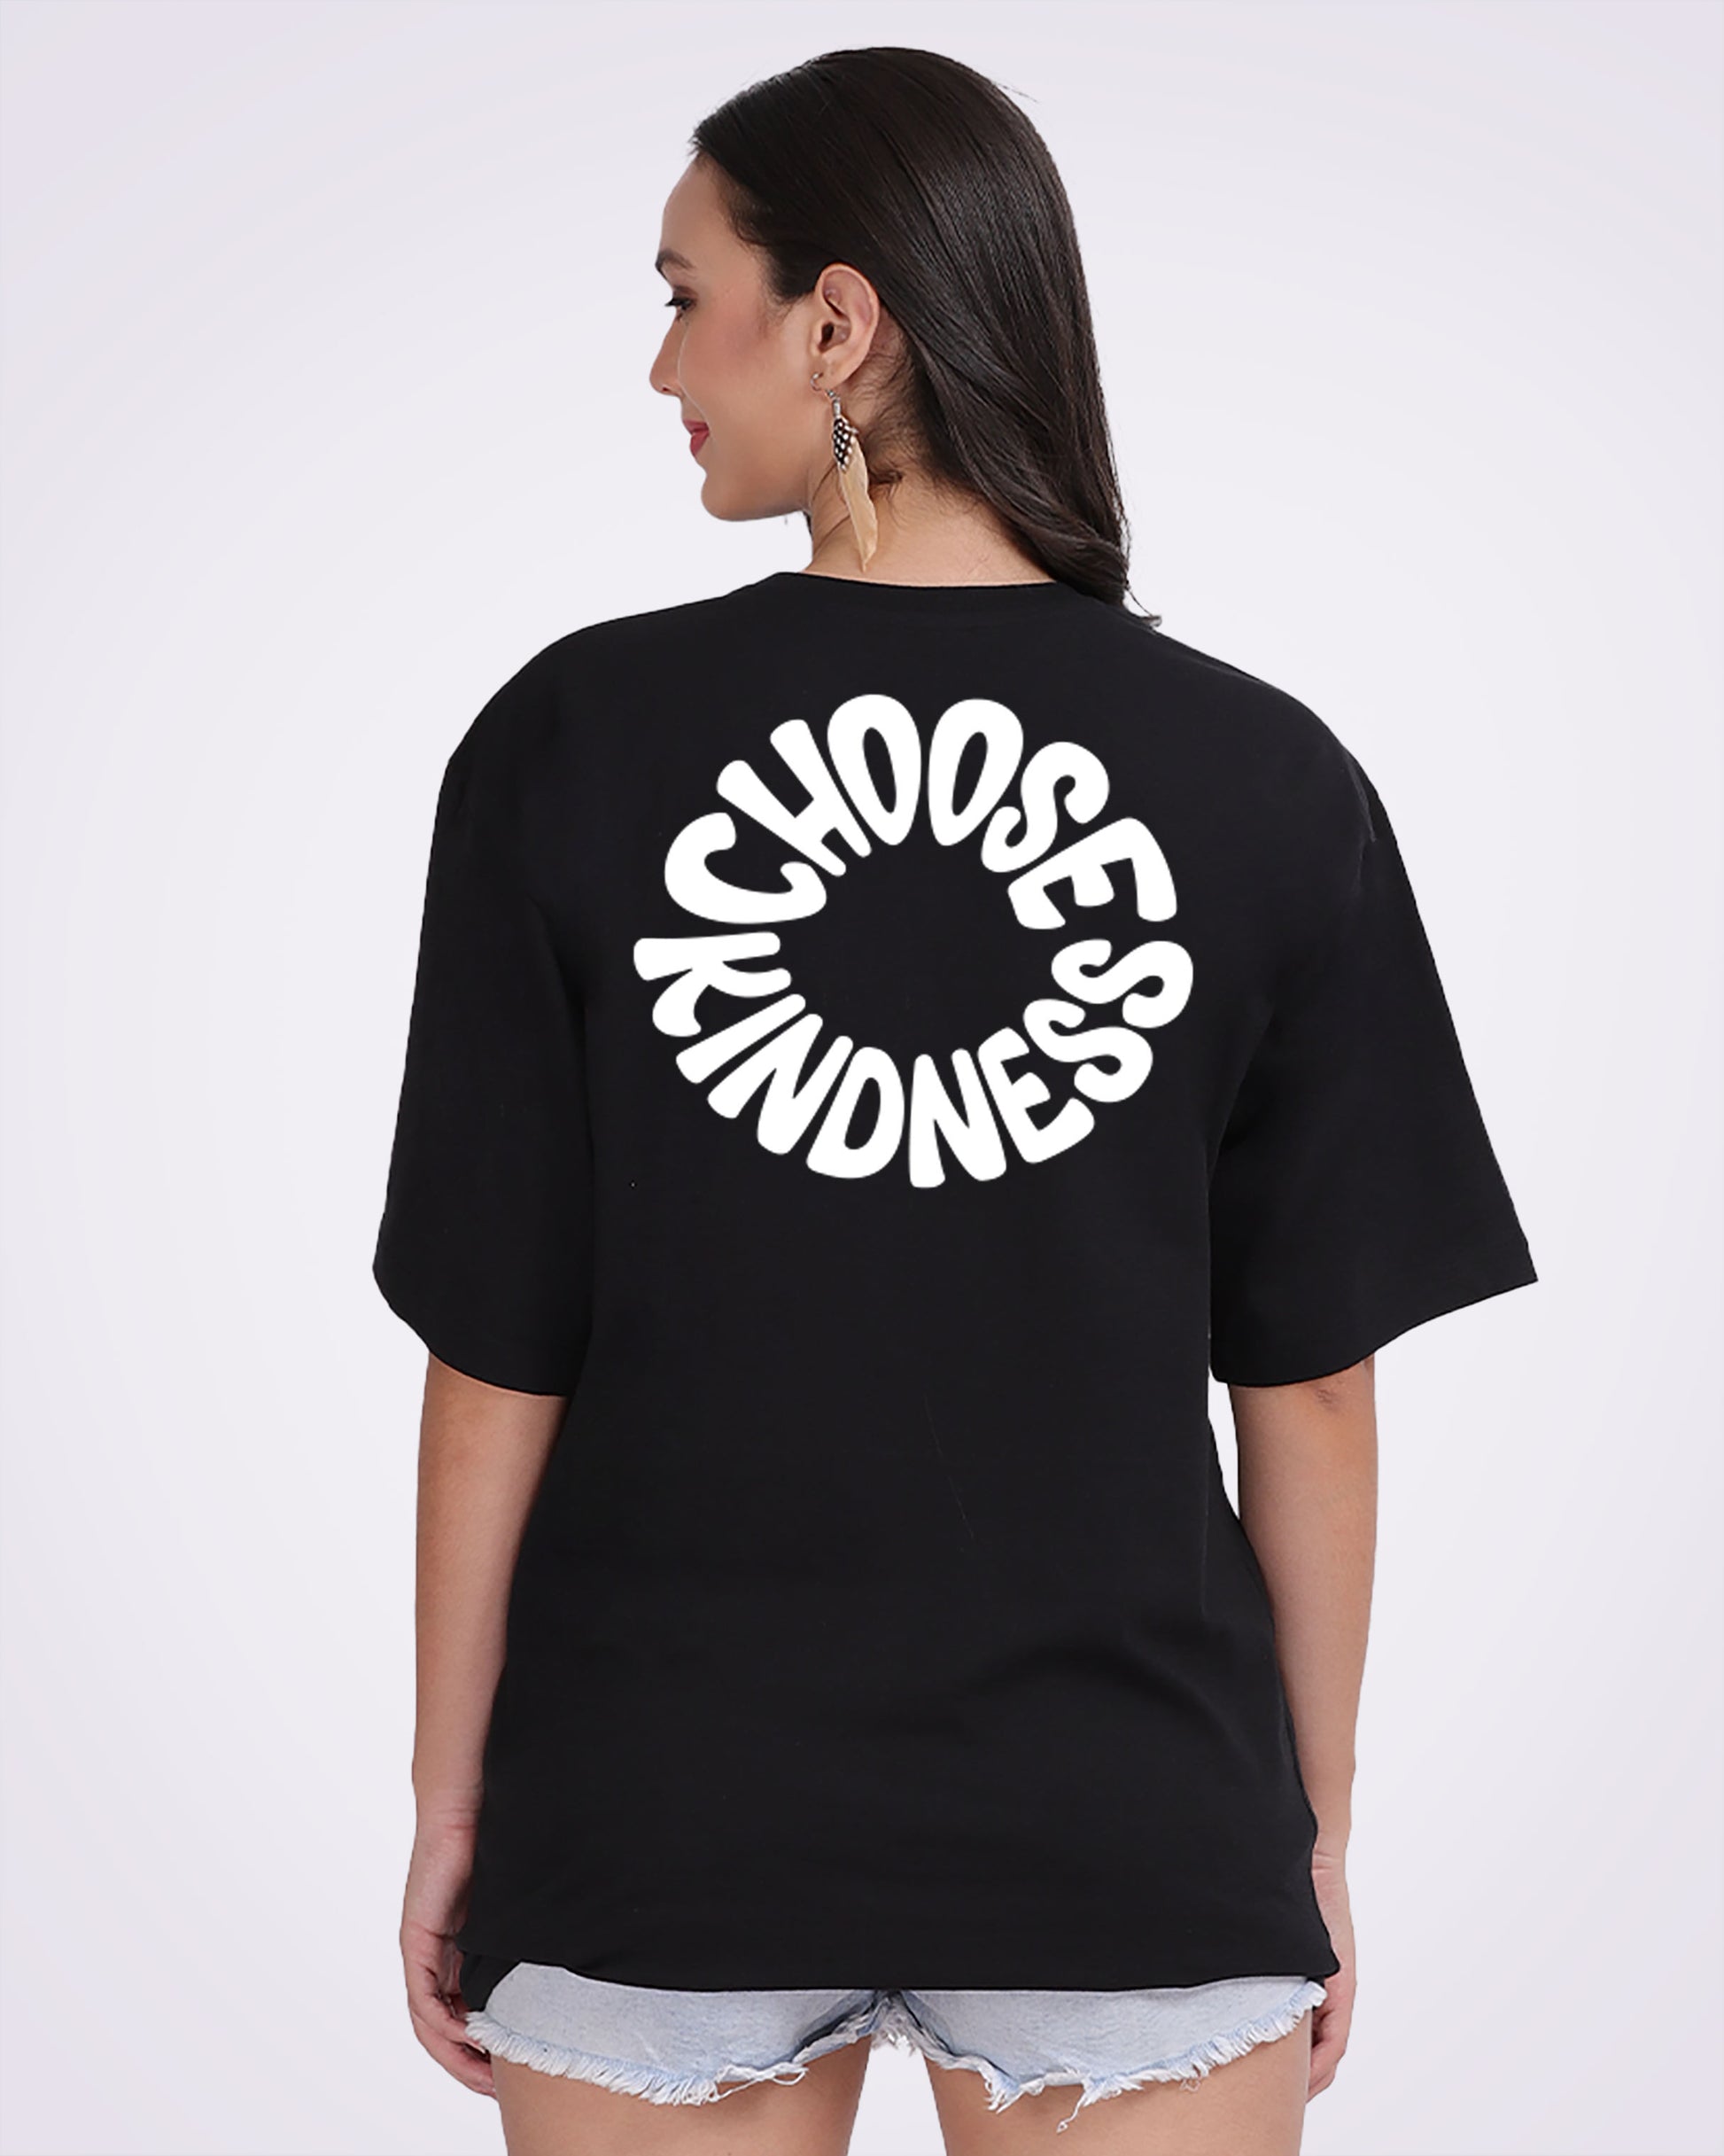 Choose Kindness Oversized Women Tshirt